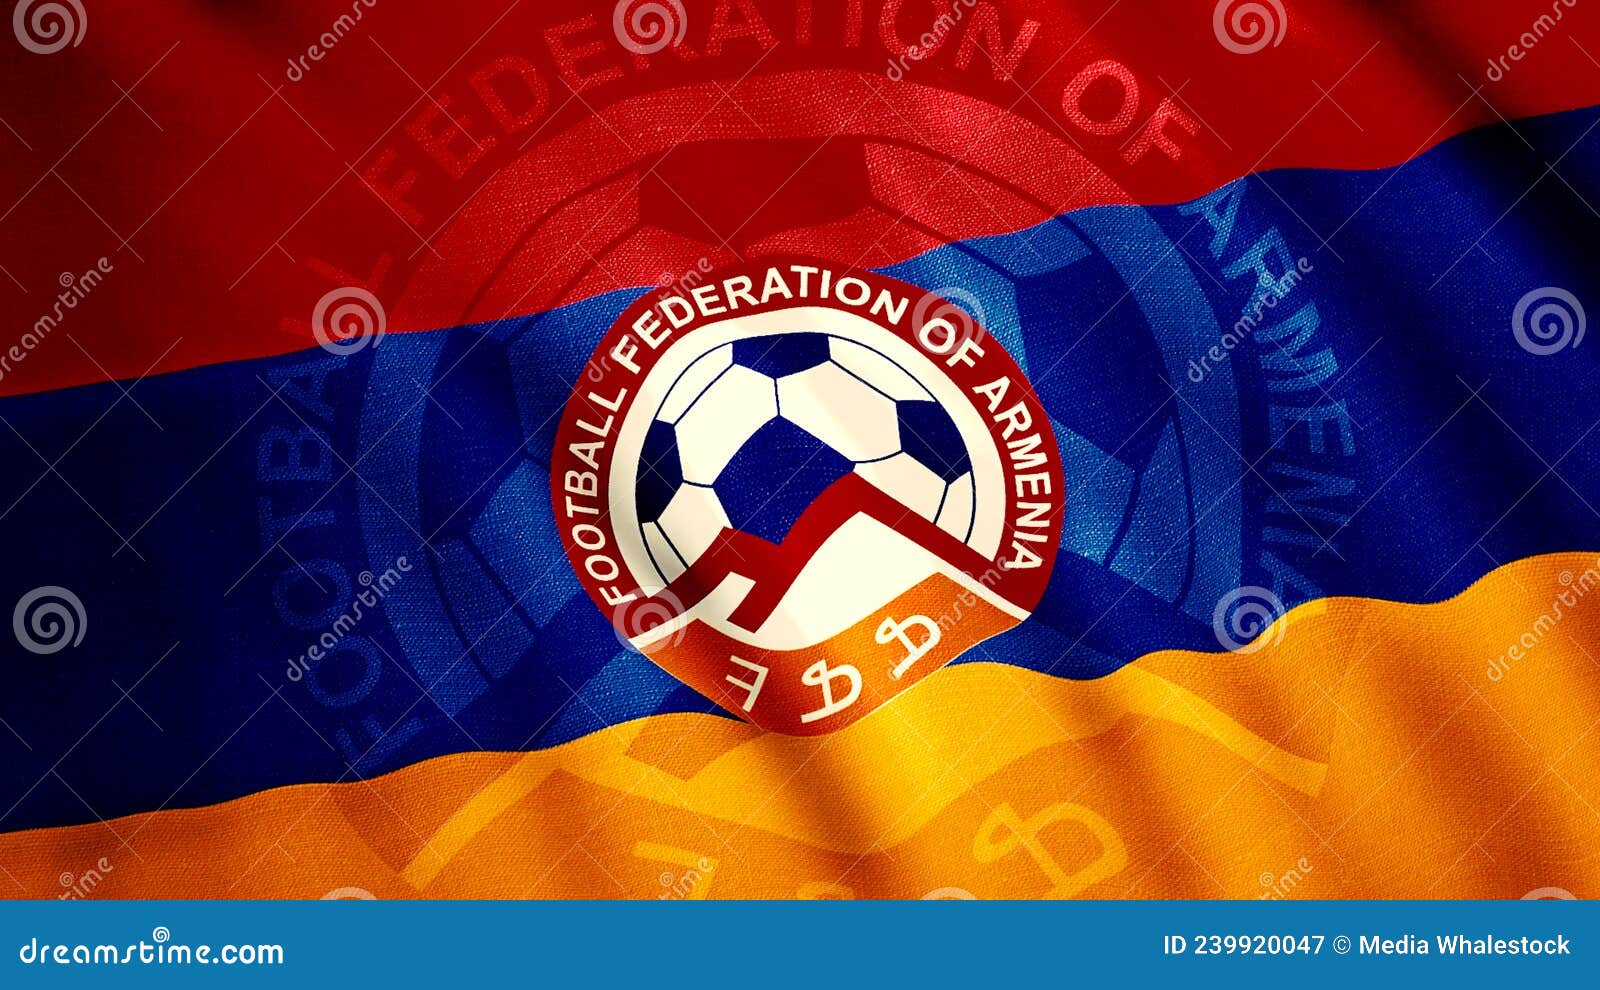 FOOTBALL FEDERATION OF ARMENIA